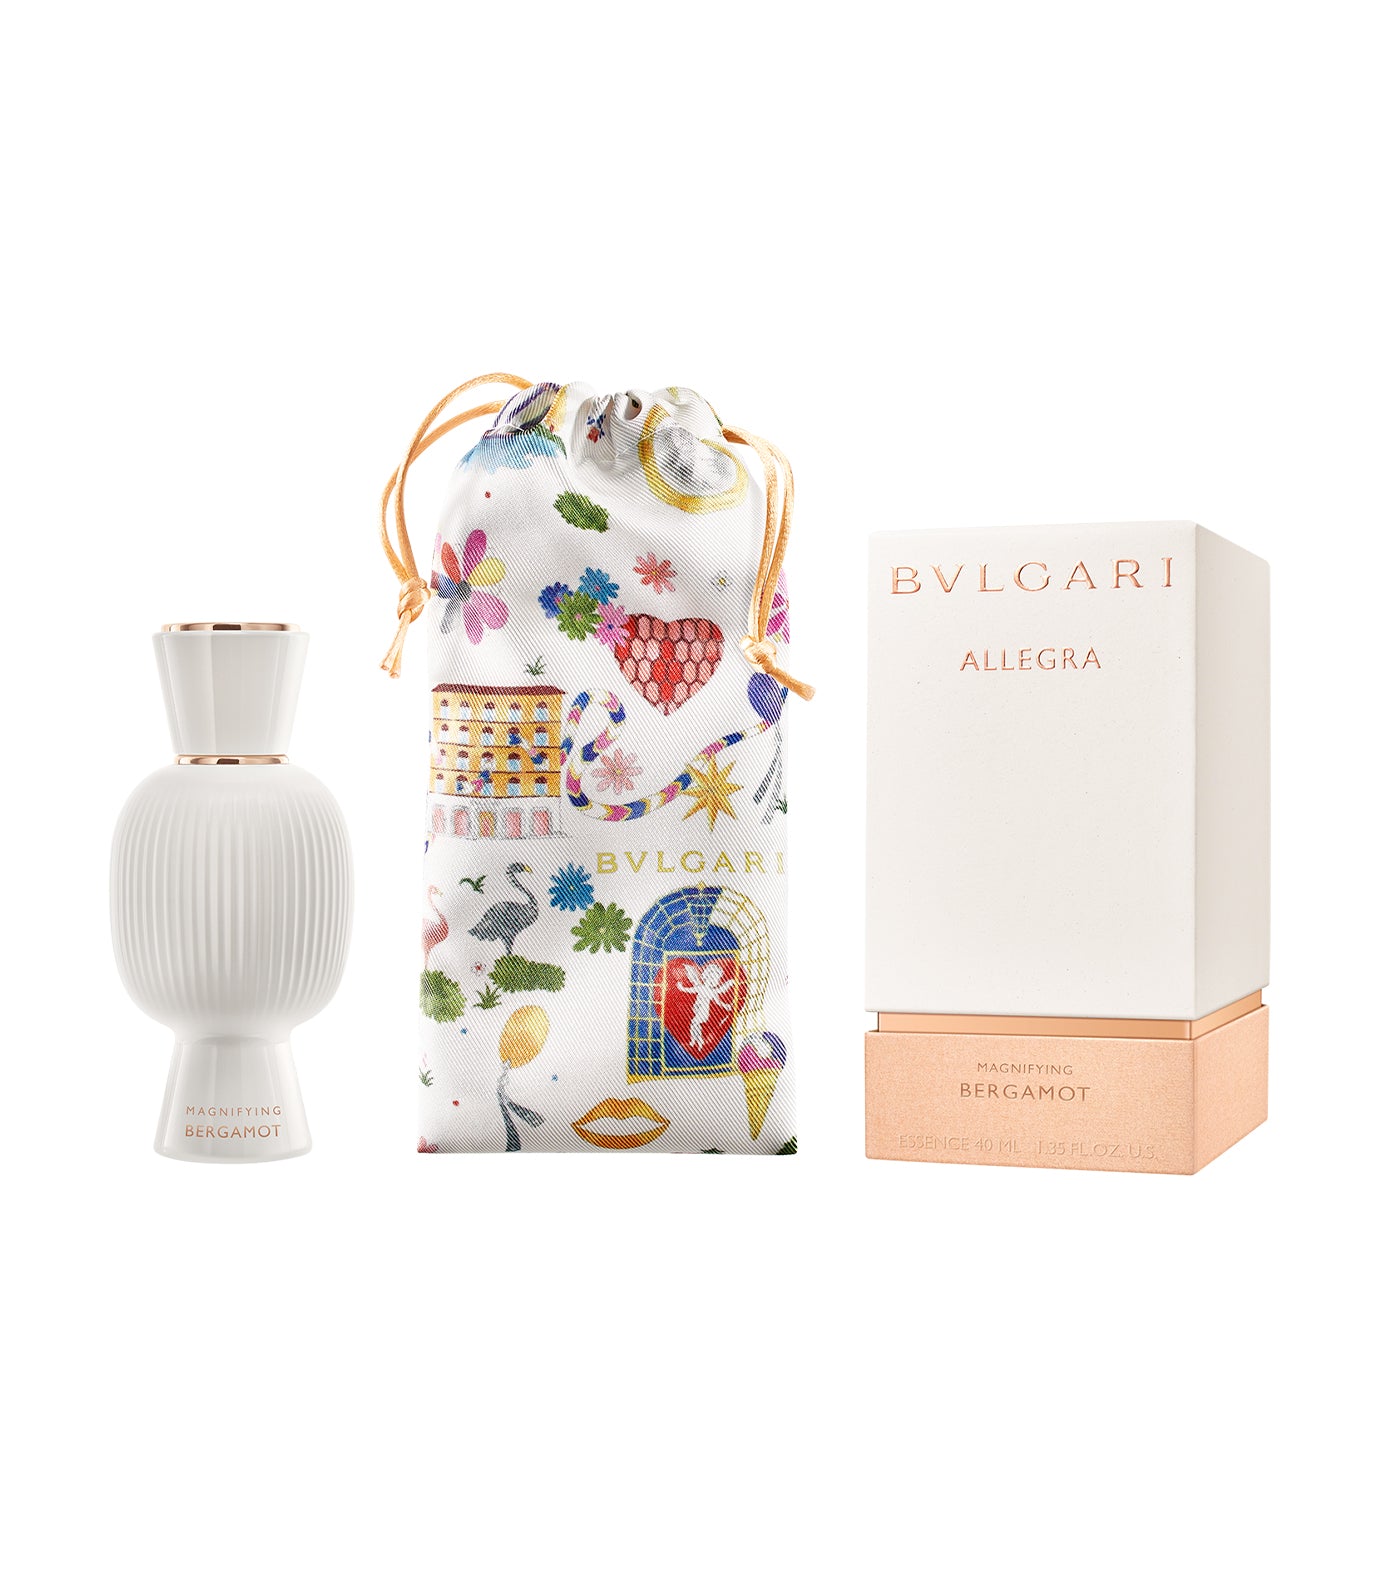 BVLGARI ALLEGRA Magnifying Bergamot Eau De Parfum